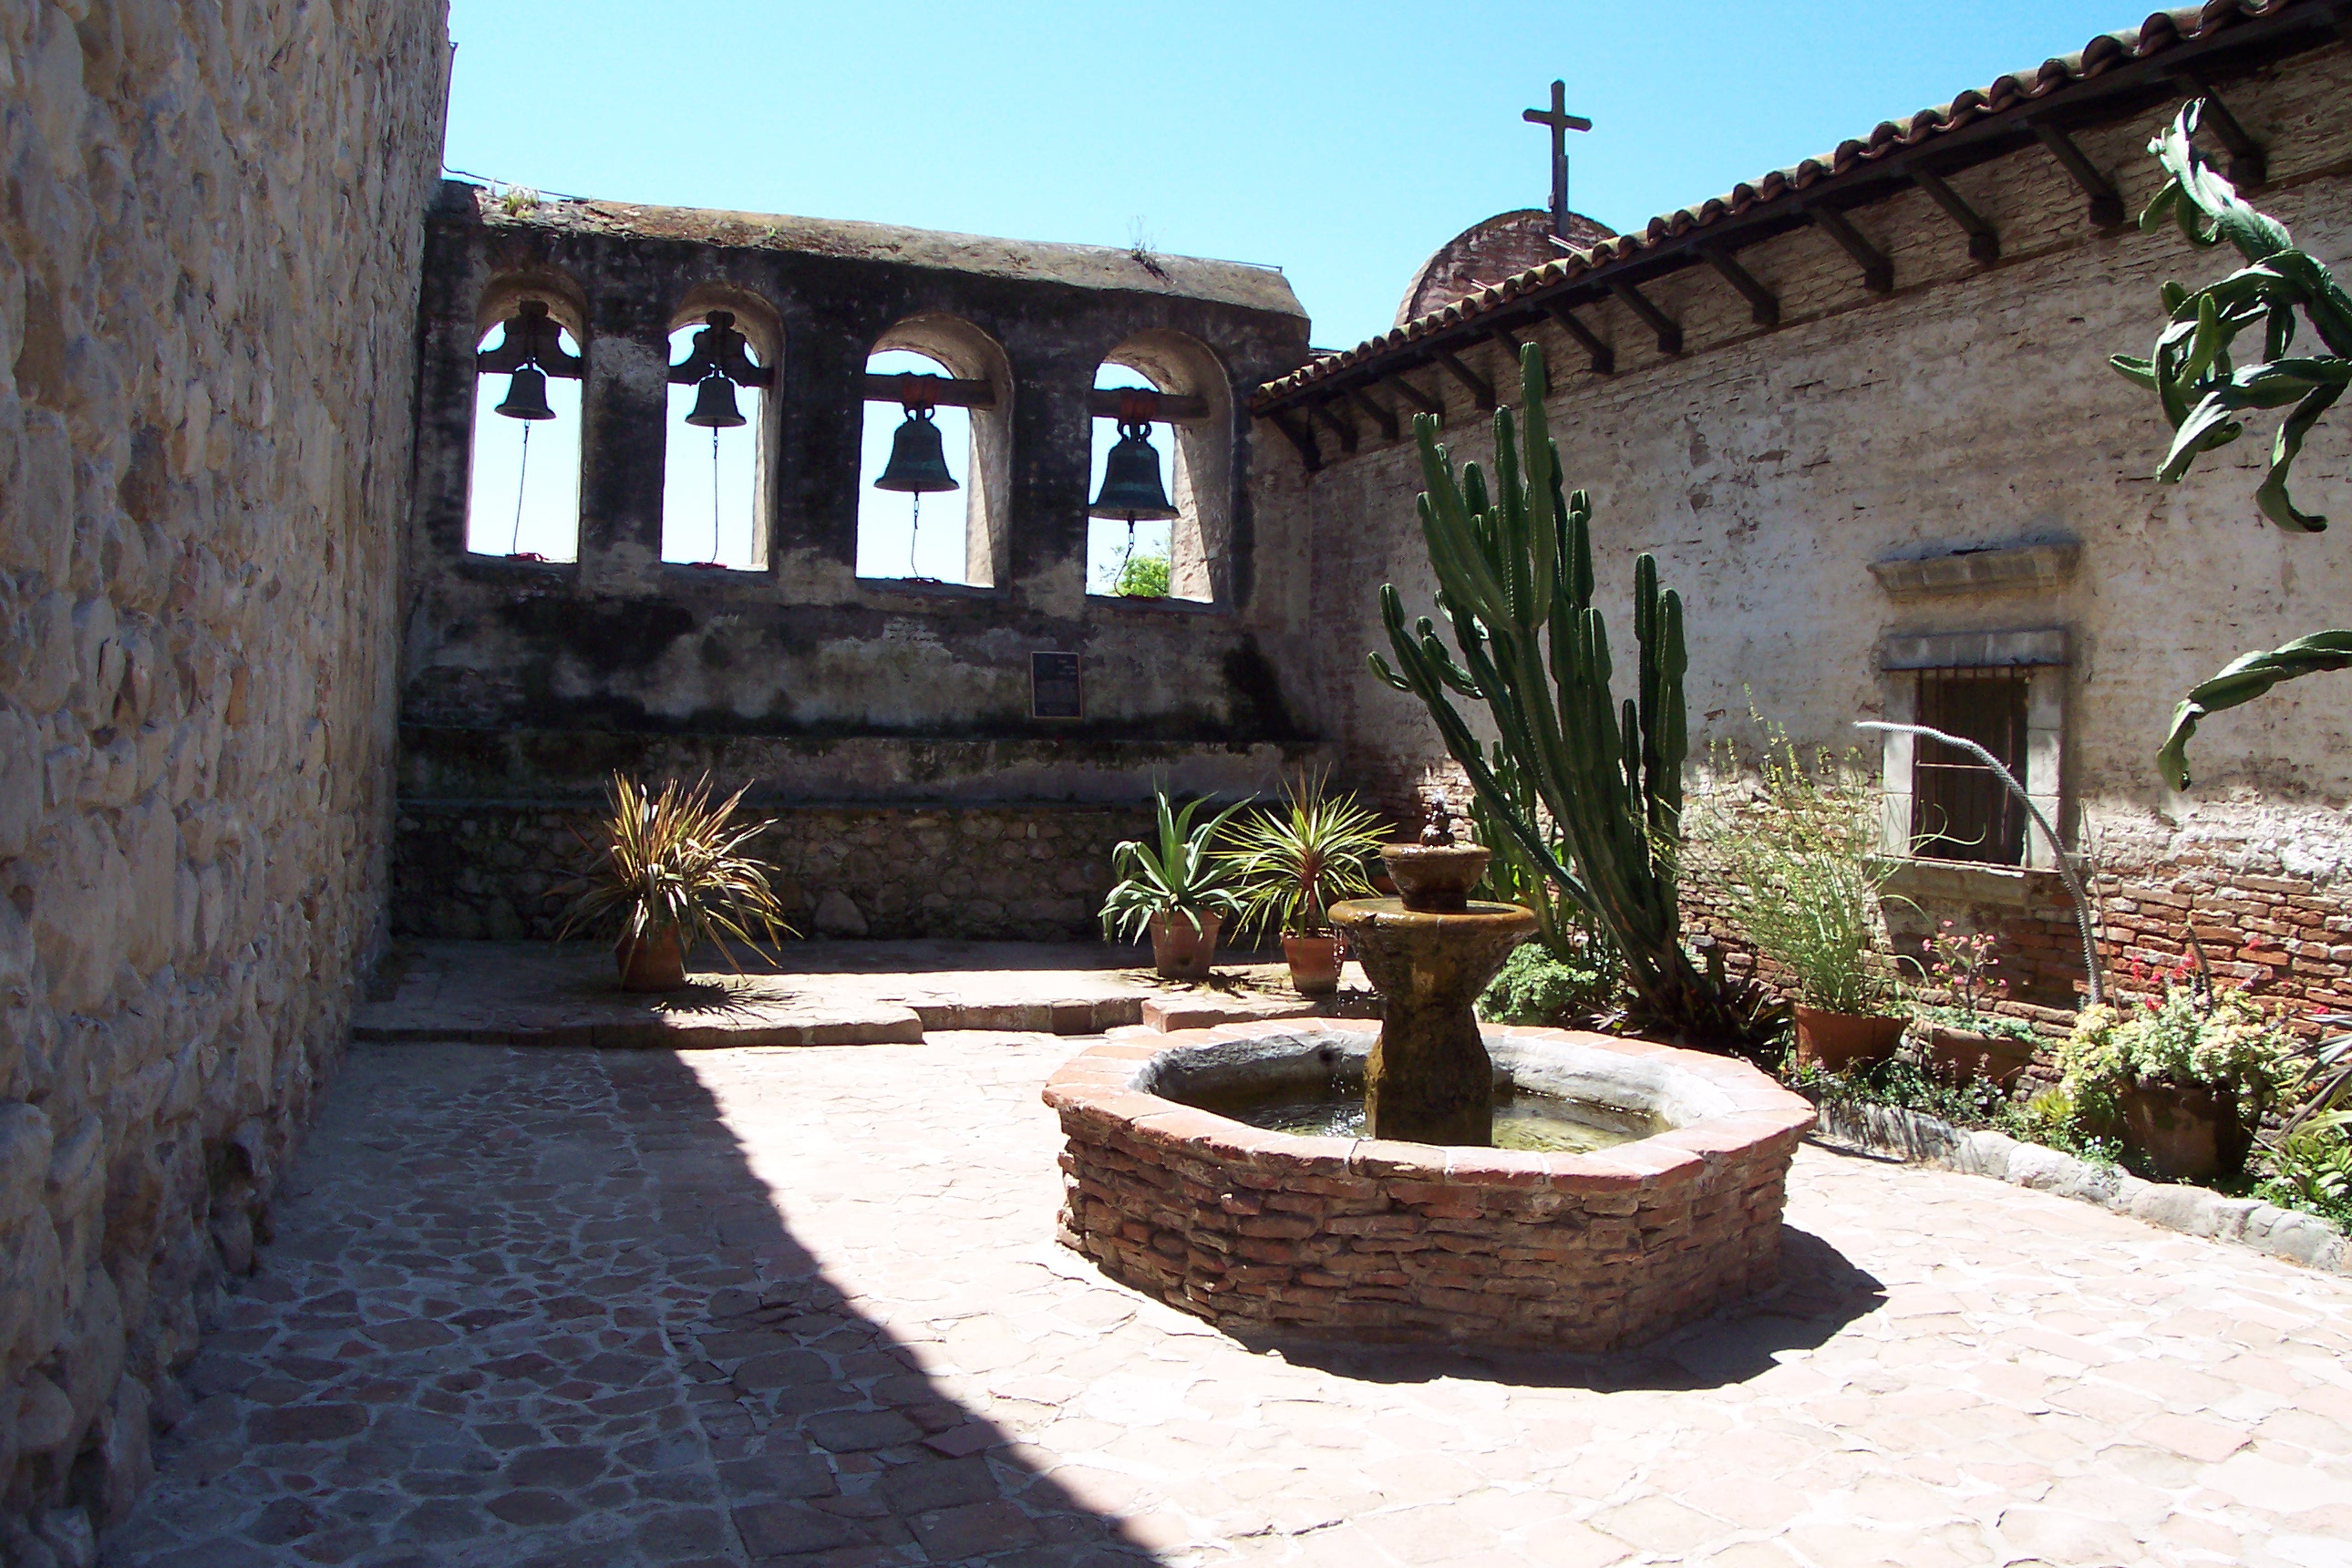 Gardens at Mission San Juan Capistrano